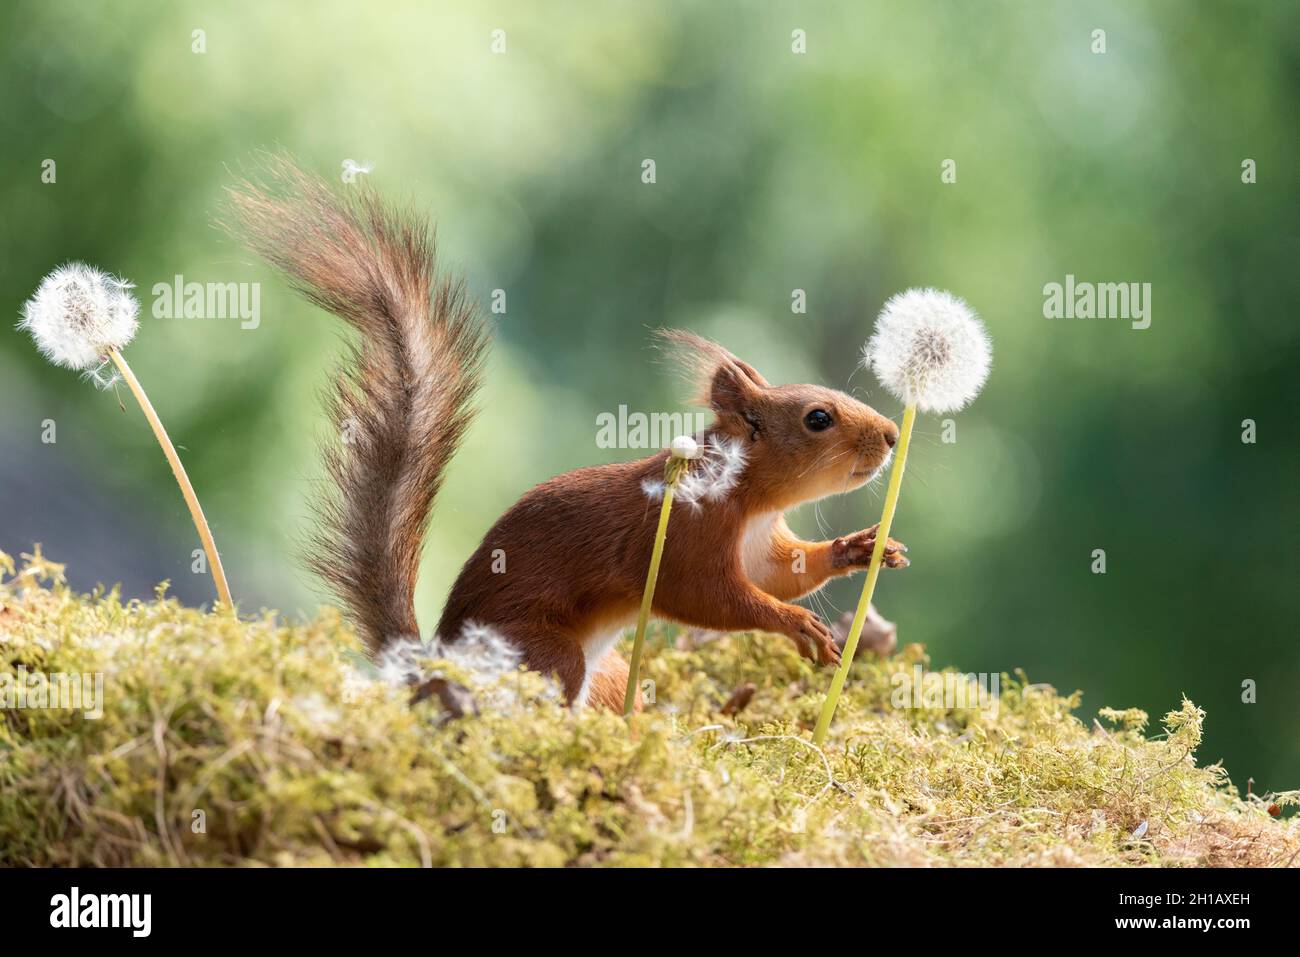 Eekhoorn; Red Squirrel; Sciurus vulgaris is holding a dandelion stem with seeds Stock Photo